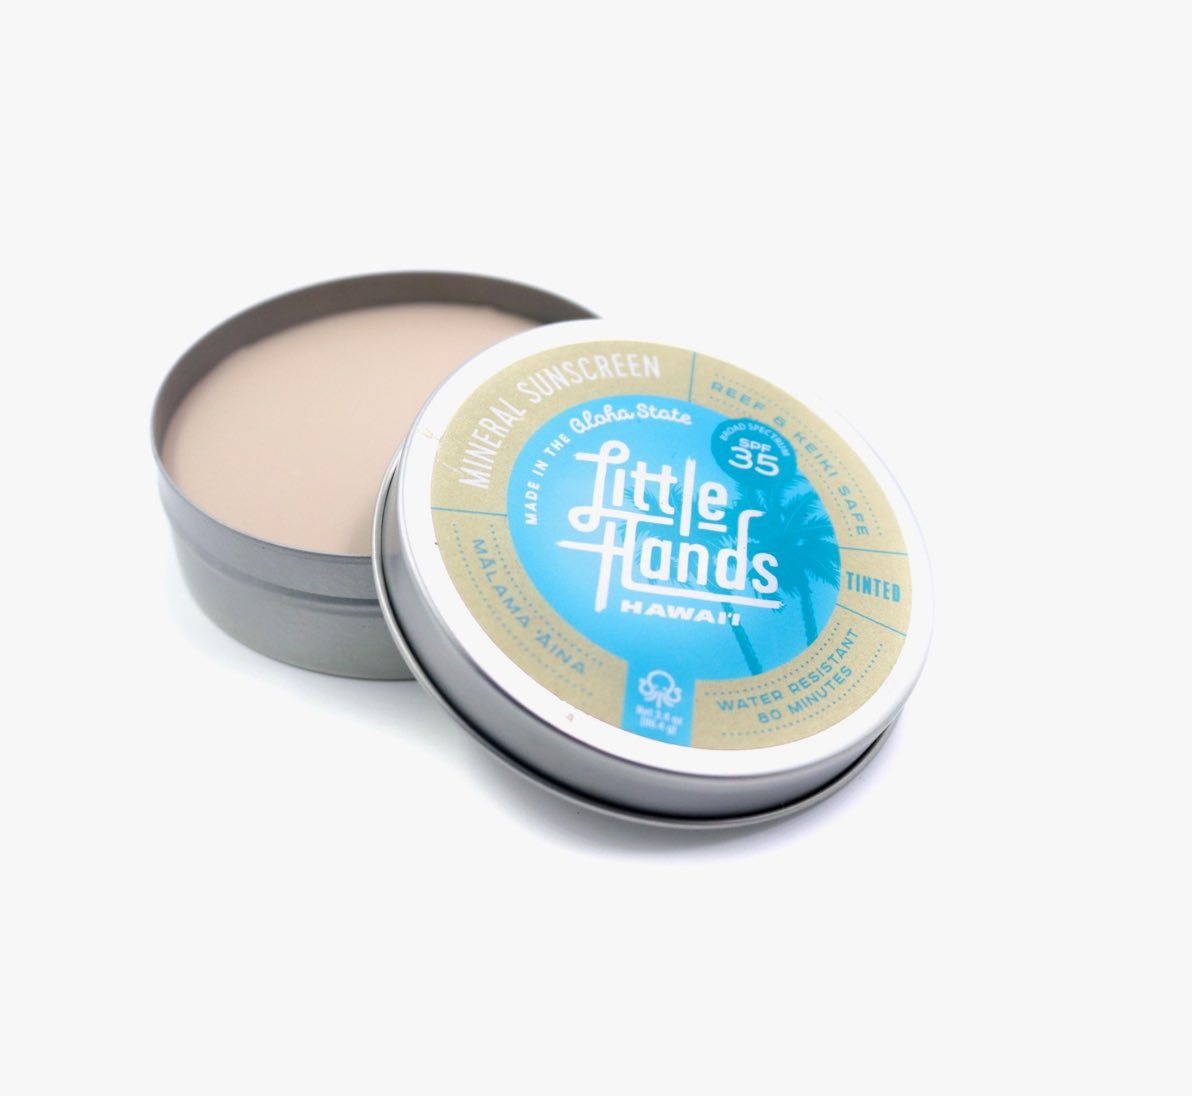 Little Hands Hawai’i Organic Body And Face Sunscreen